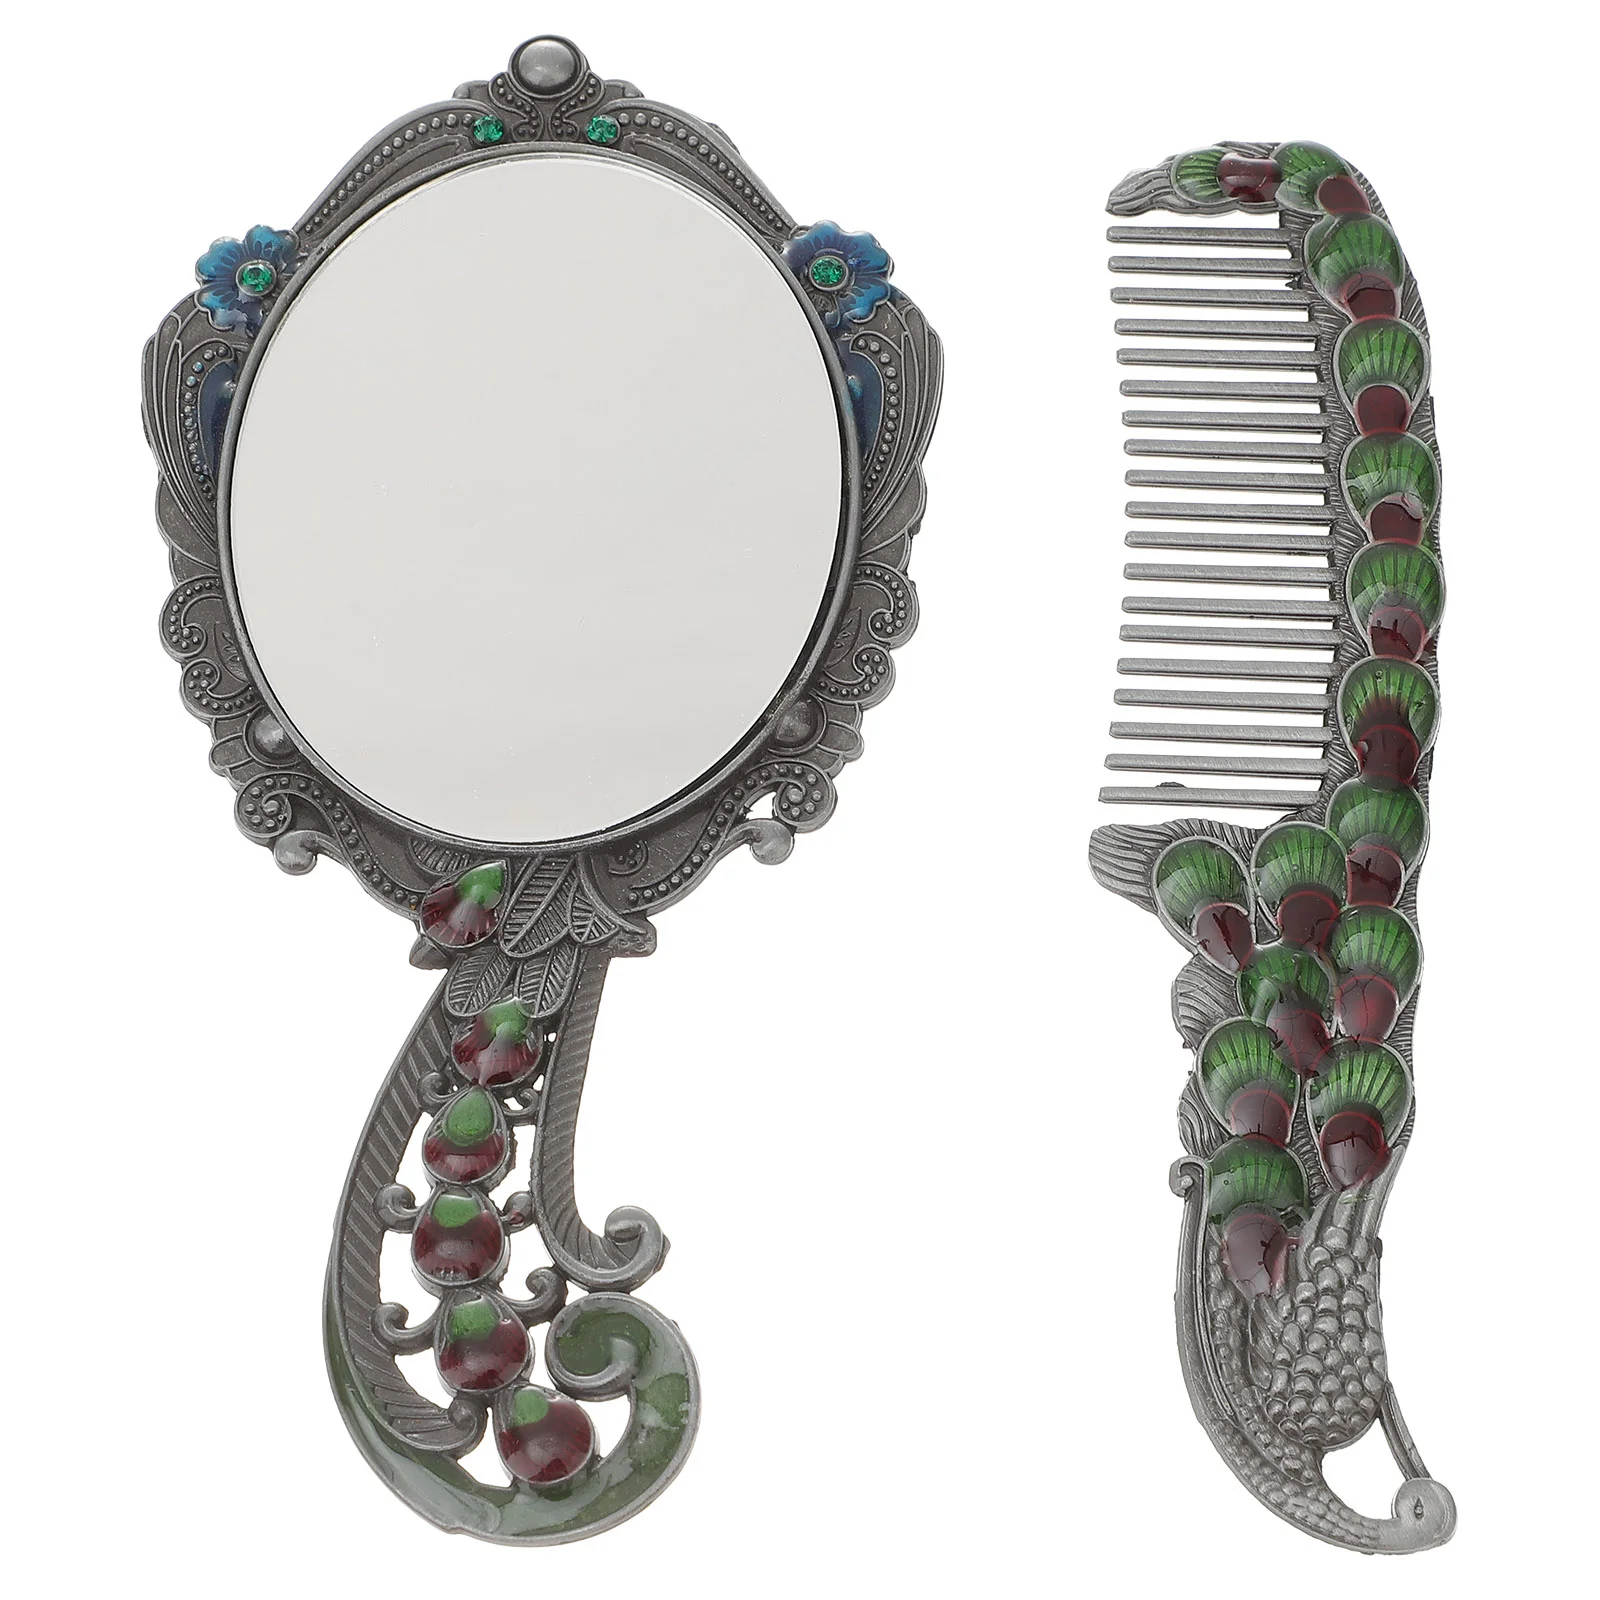 2pcs Mirror and Comb Set, Vintage Handheld Mirror Makeup Mirror Decorative Pocket Mirror for Travel Gift